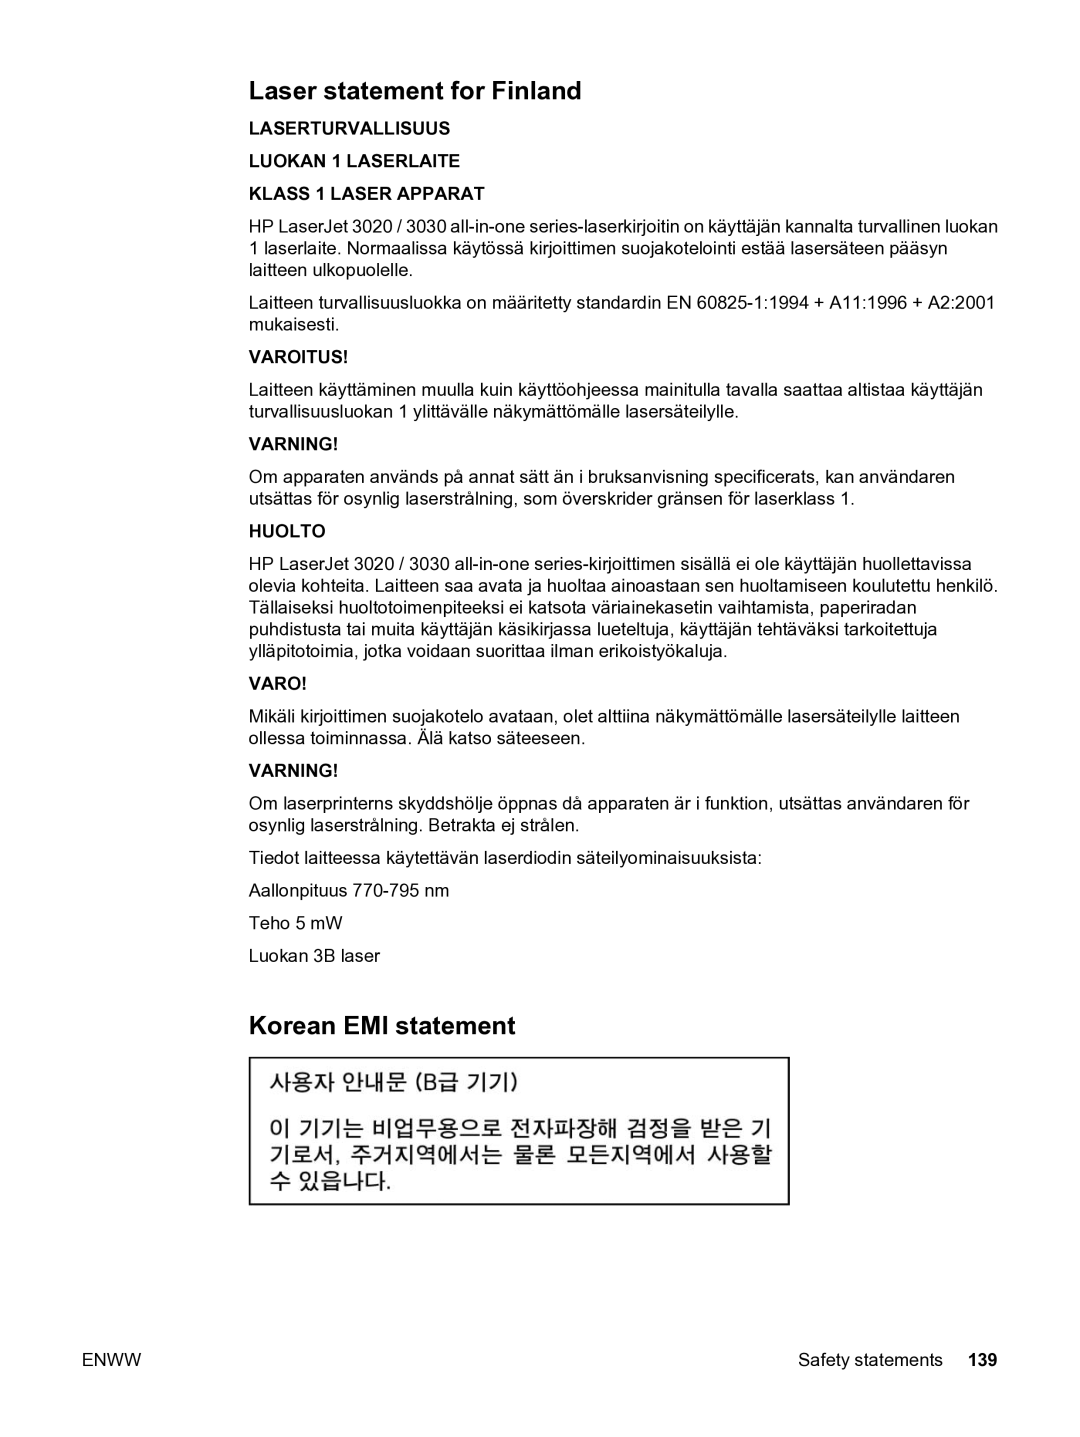 HP 3020 manual Laser statement for Finland, Korean EMI statement 